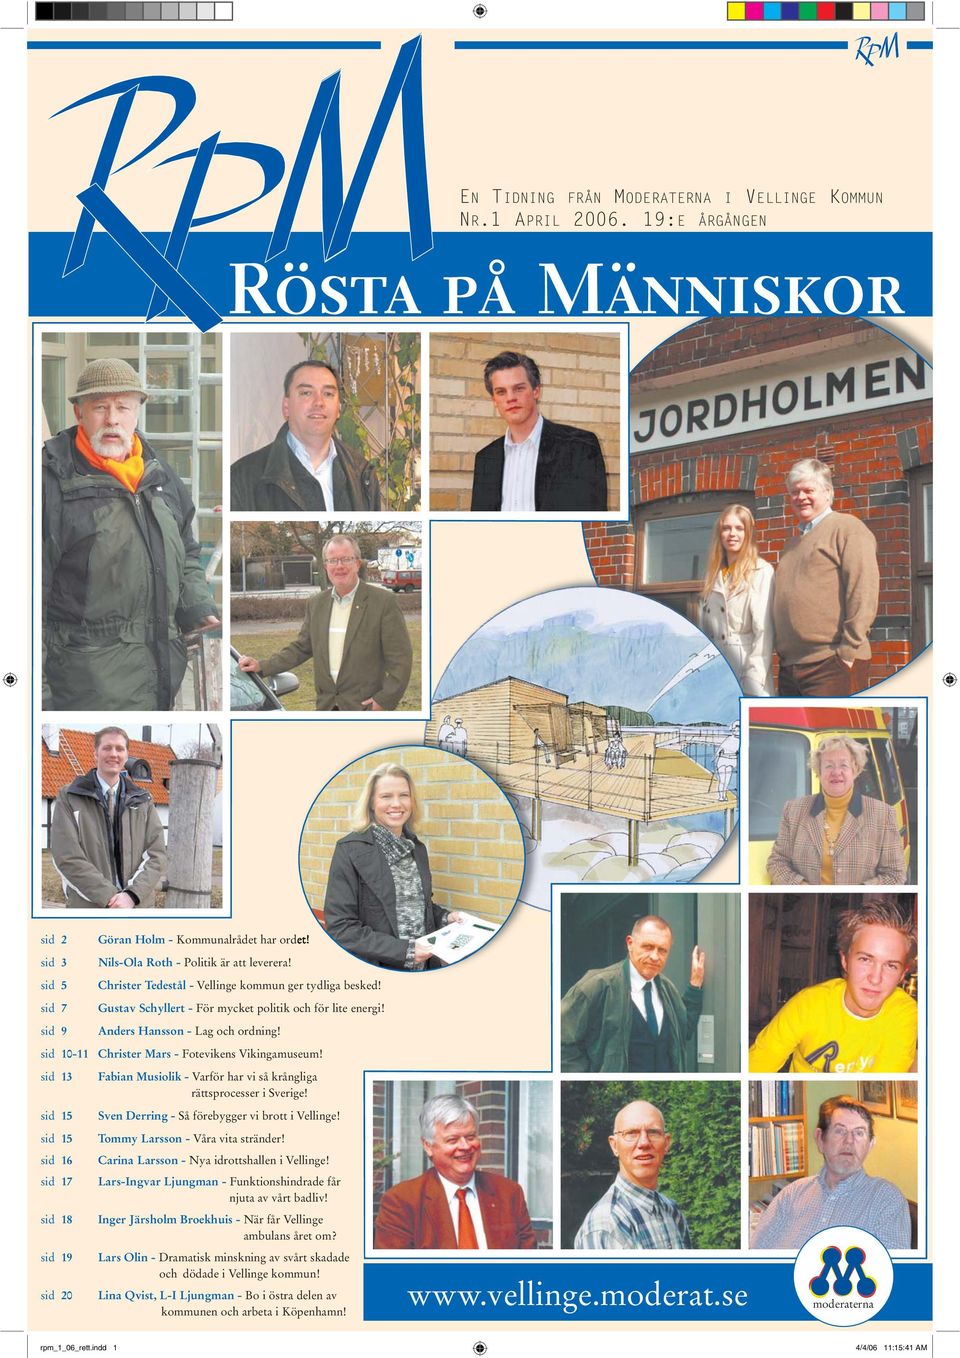 sid 10-11 Christer Mars - Fotevikens Vikingamuseum! sid 13 sid 15 sid 15 sid 16 sid 17 sid 18 sid 19 sid 20 Fabian Musiolik - Varför har vi så krångliga rättsprocesser i Sverige!